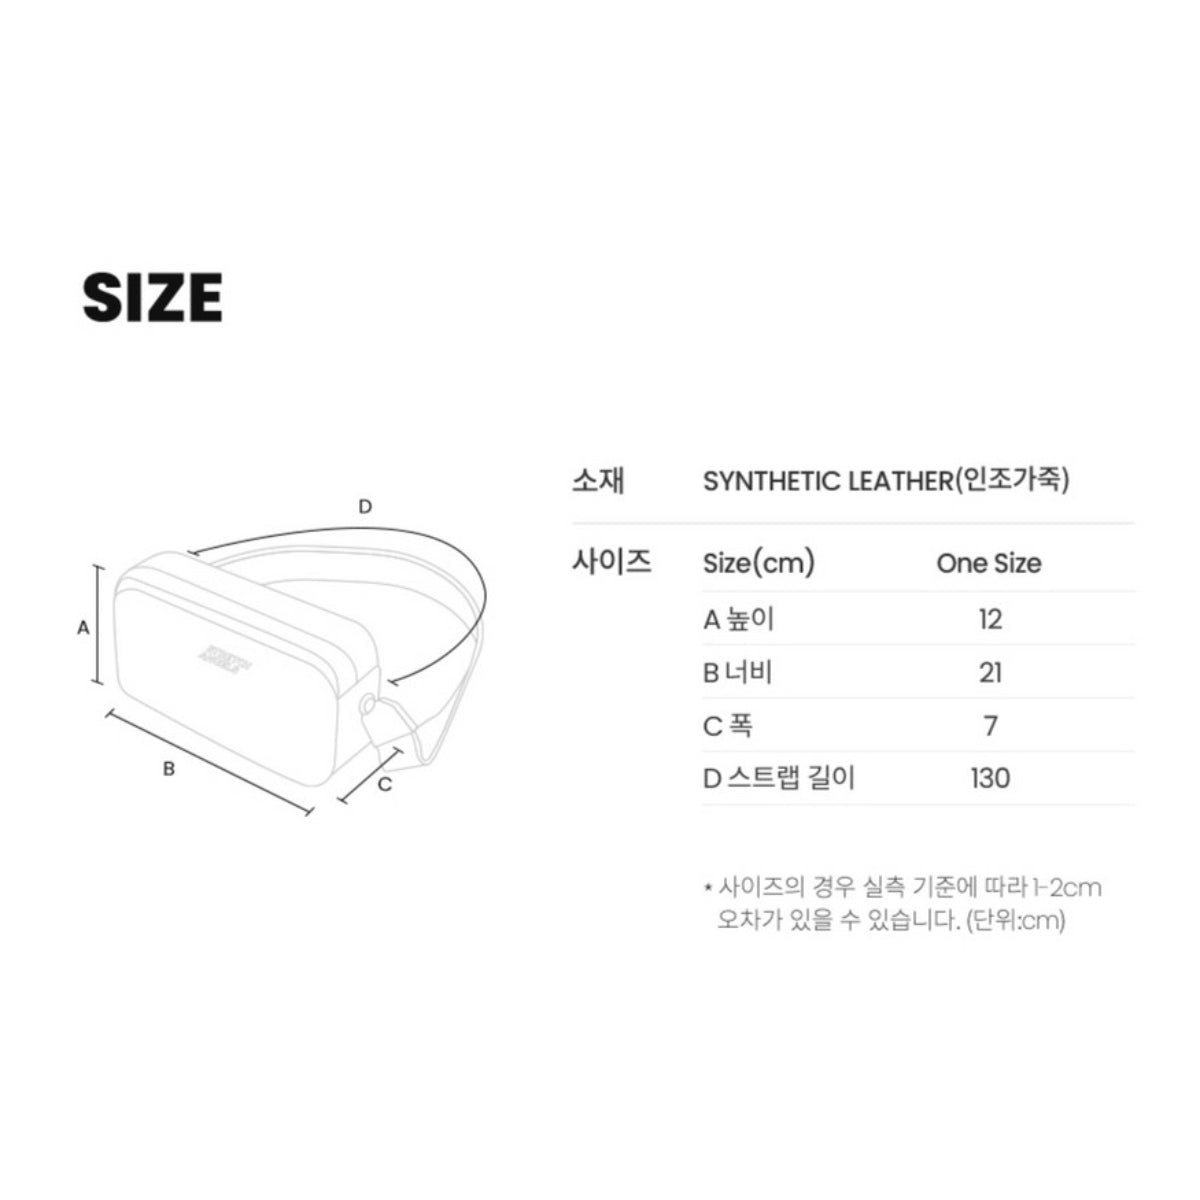 STRETCH ANGELS New Basic Panini Bag Cream Colour Compact Crossbody Bag / from Seoul, Korea